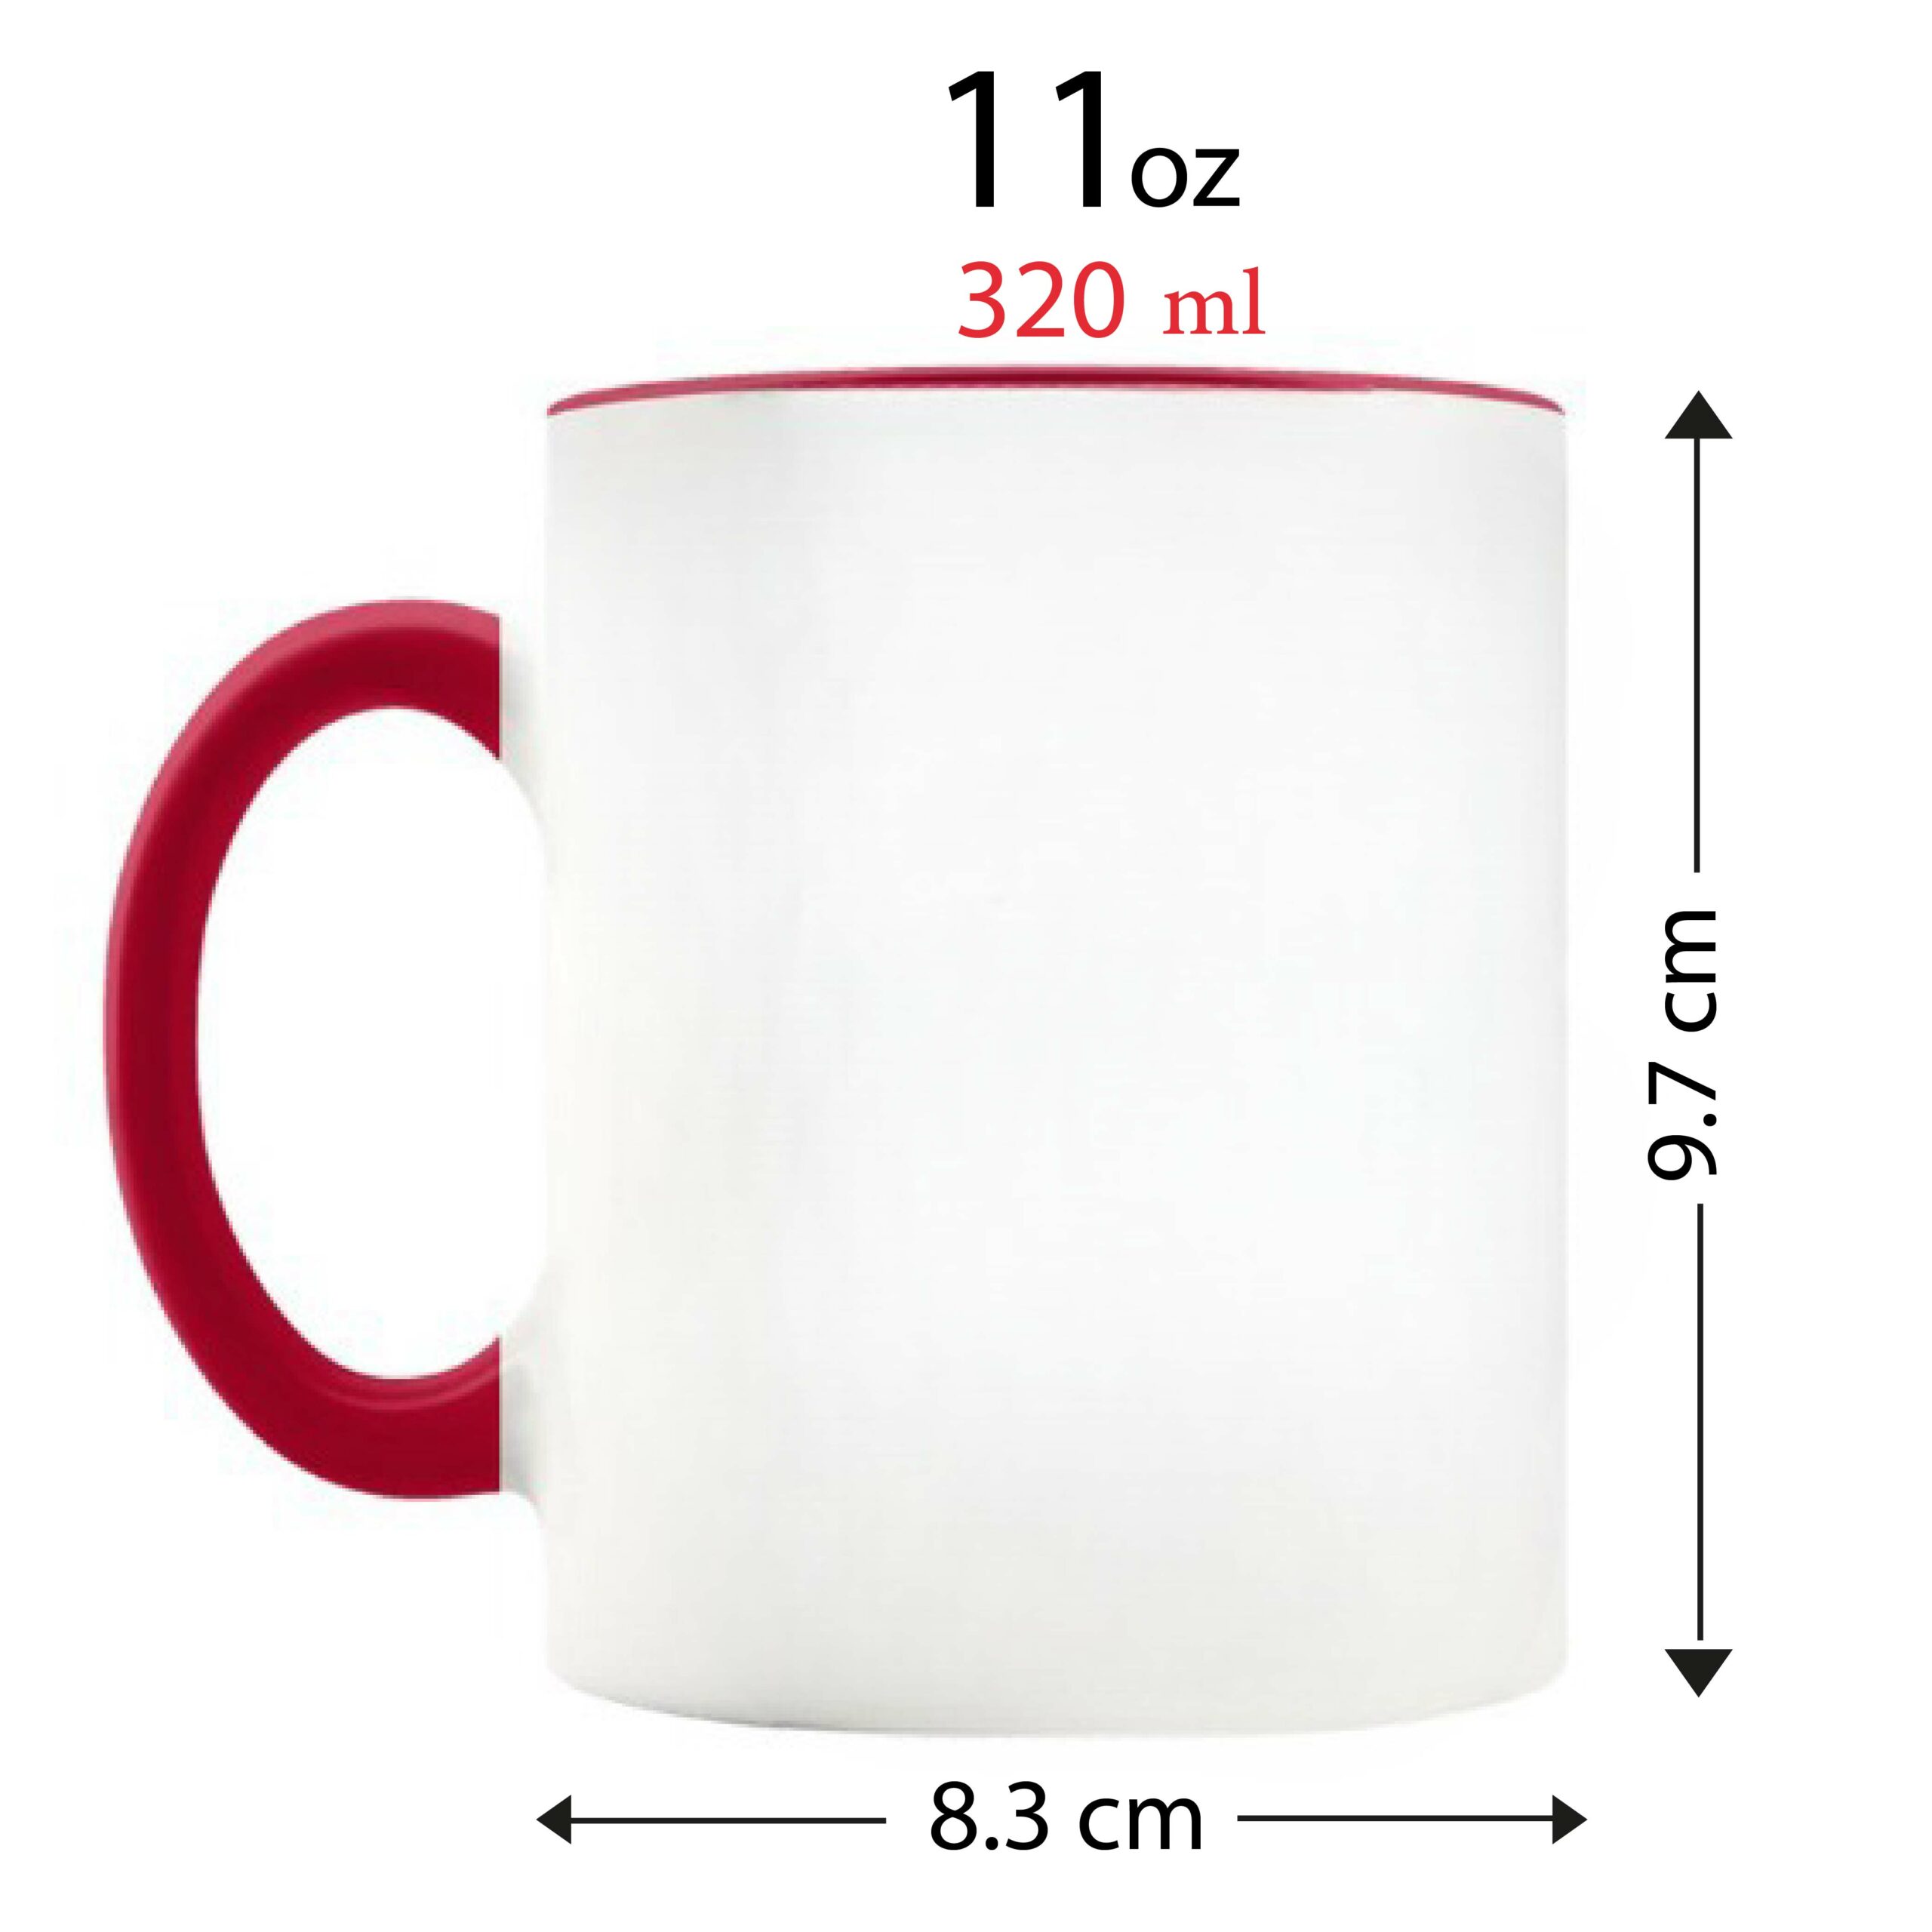 Uae national day ceramic mug design